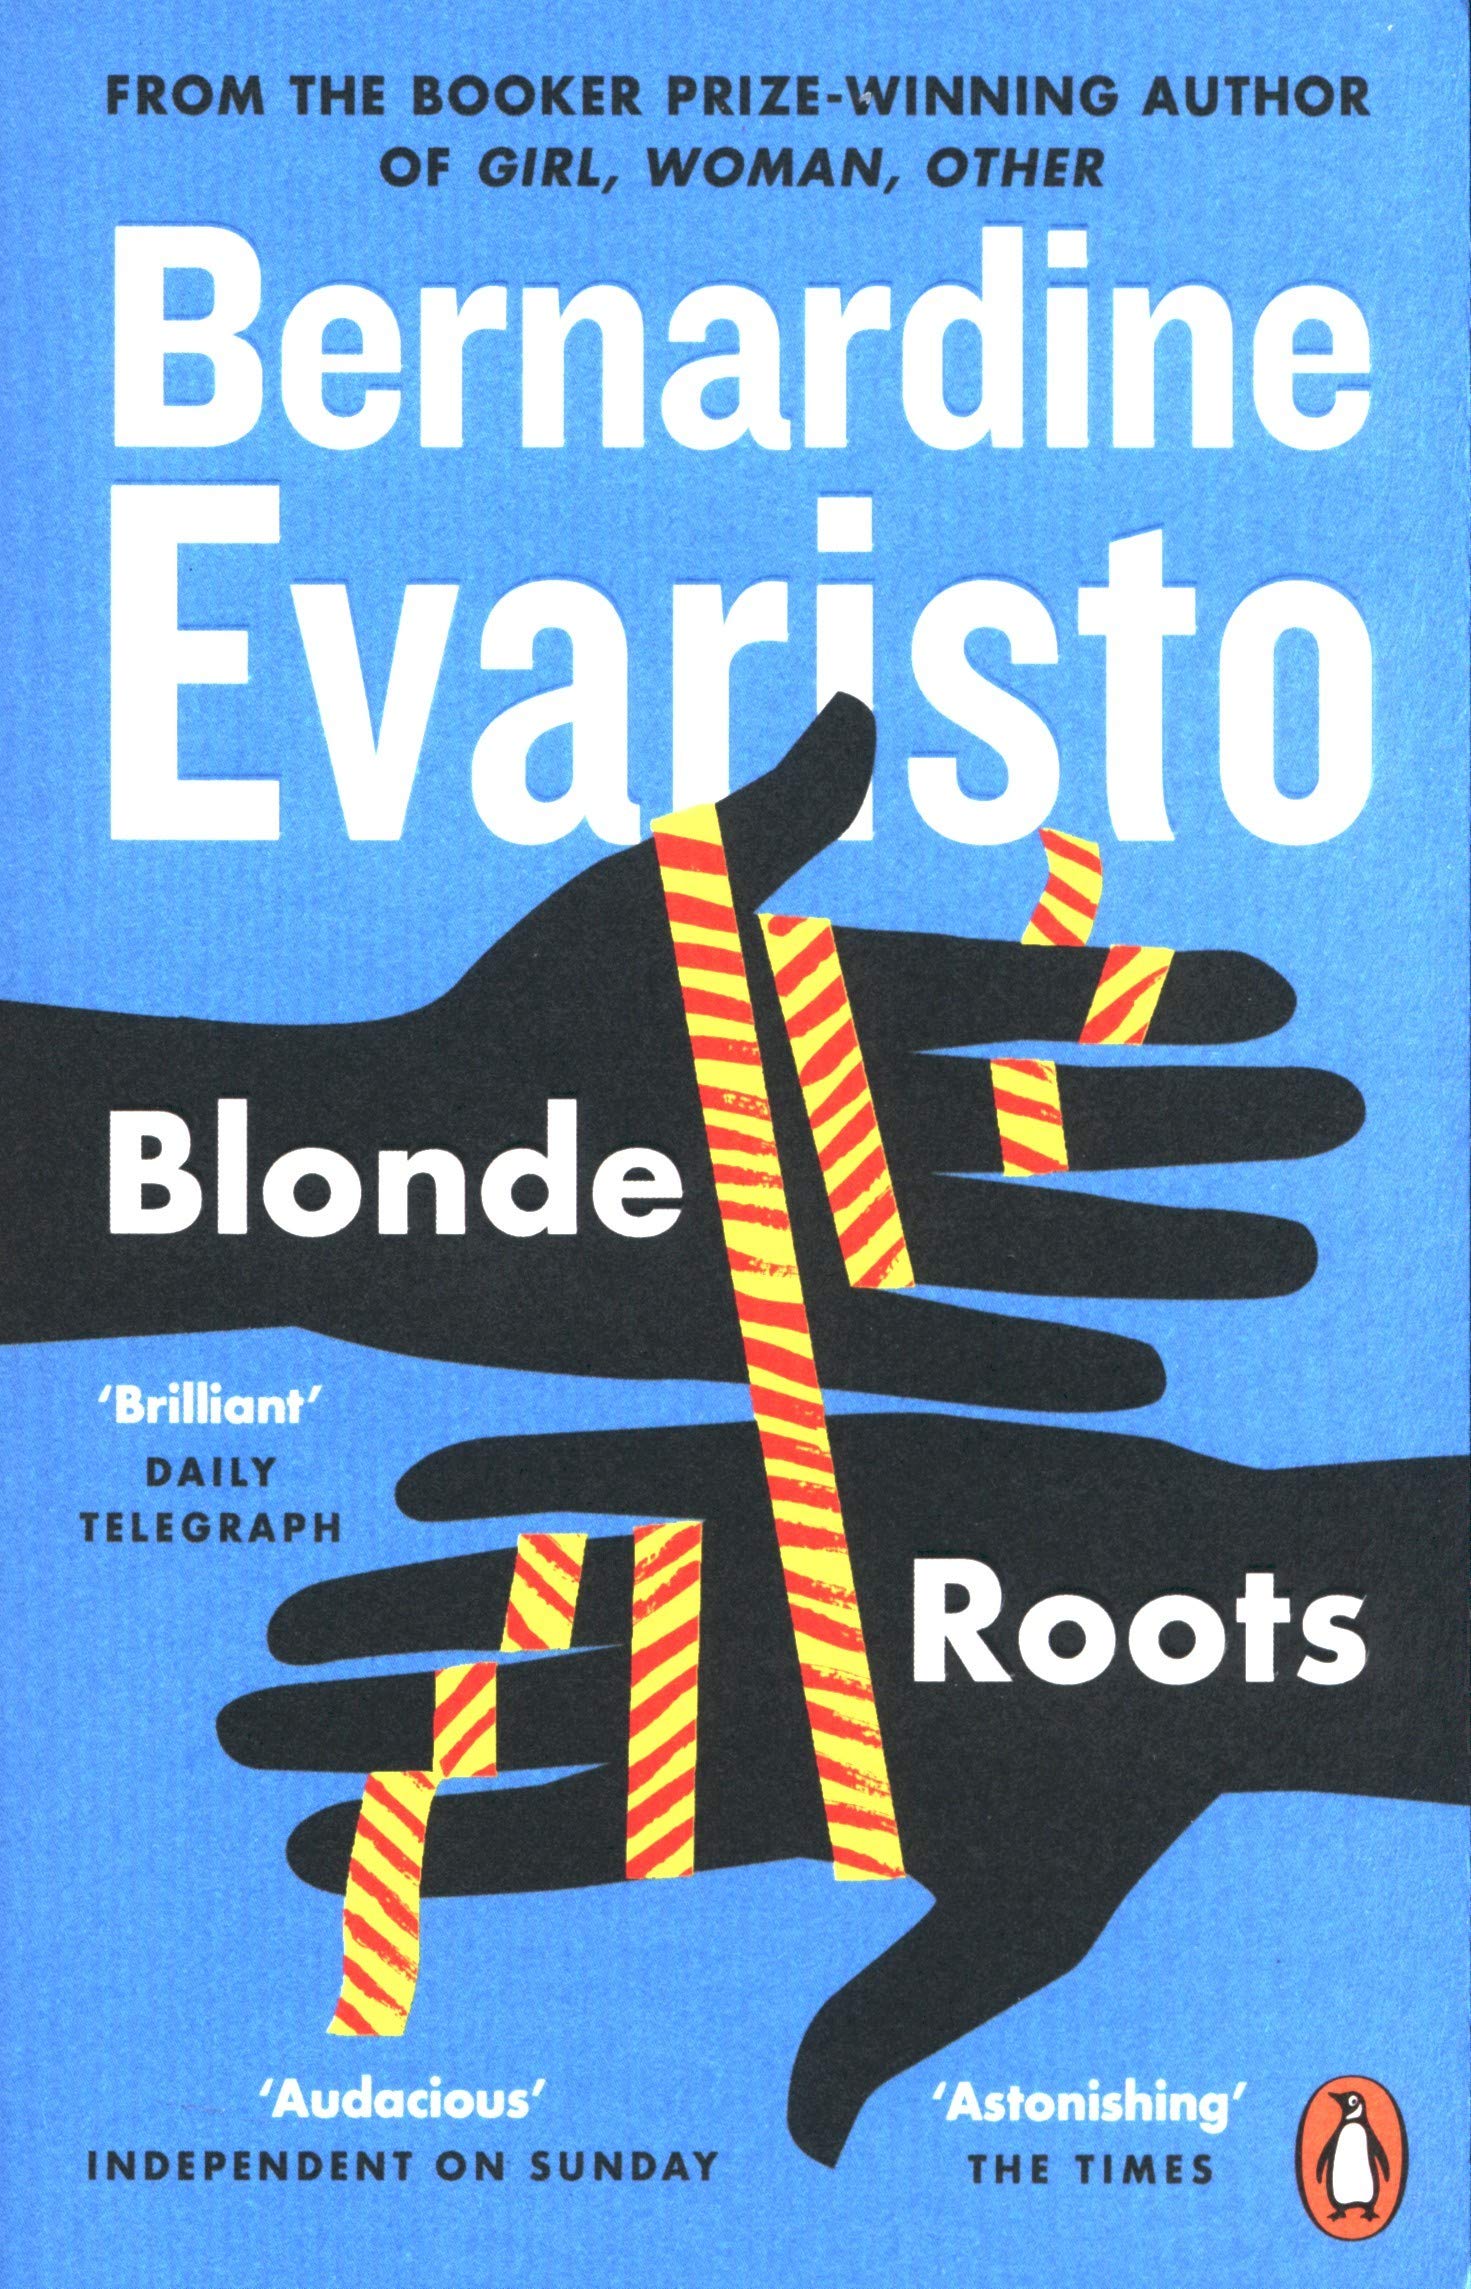 Blonde Roots | Bernardine Evaristo